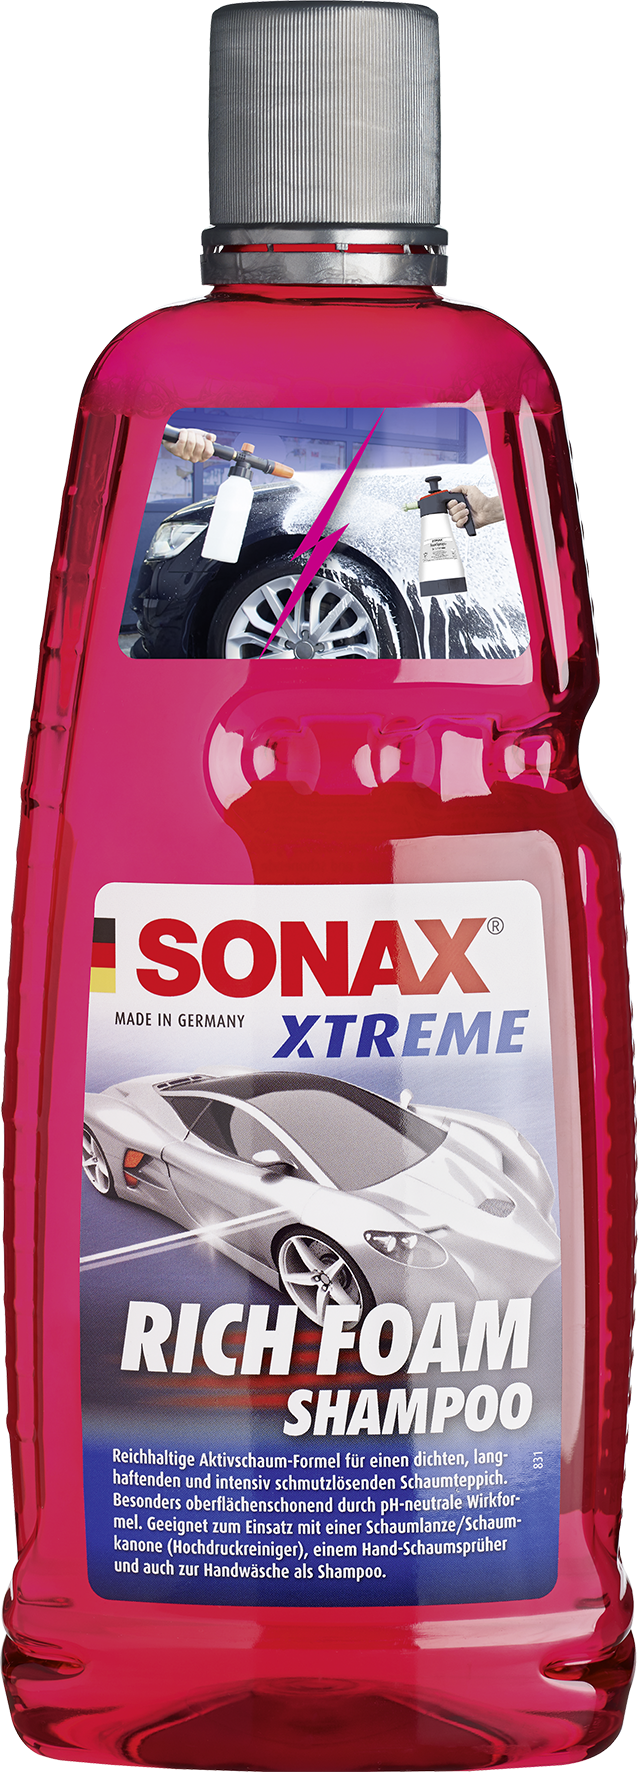 SONAX XTREME RichFoam Shampoo 1 L, Außen / Lack